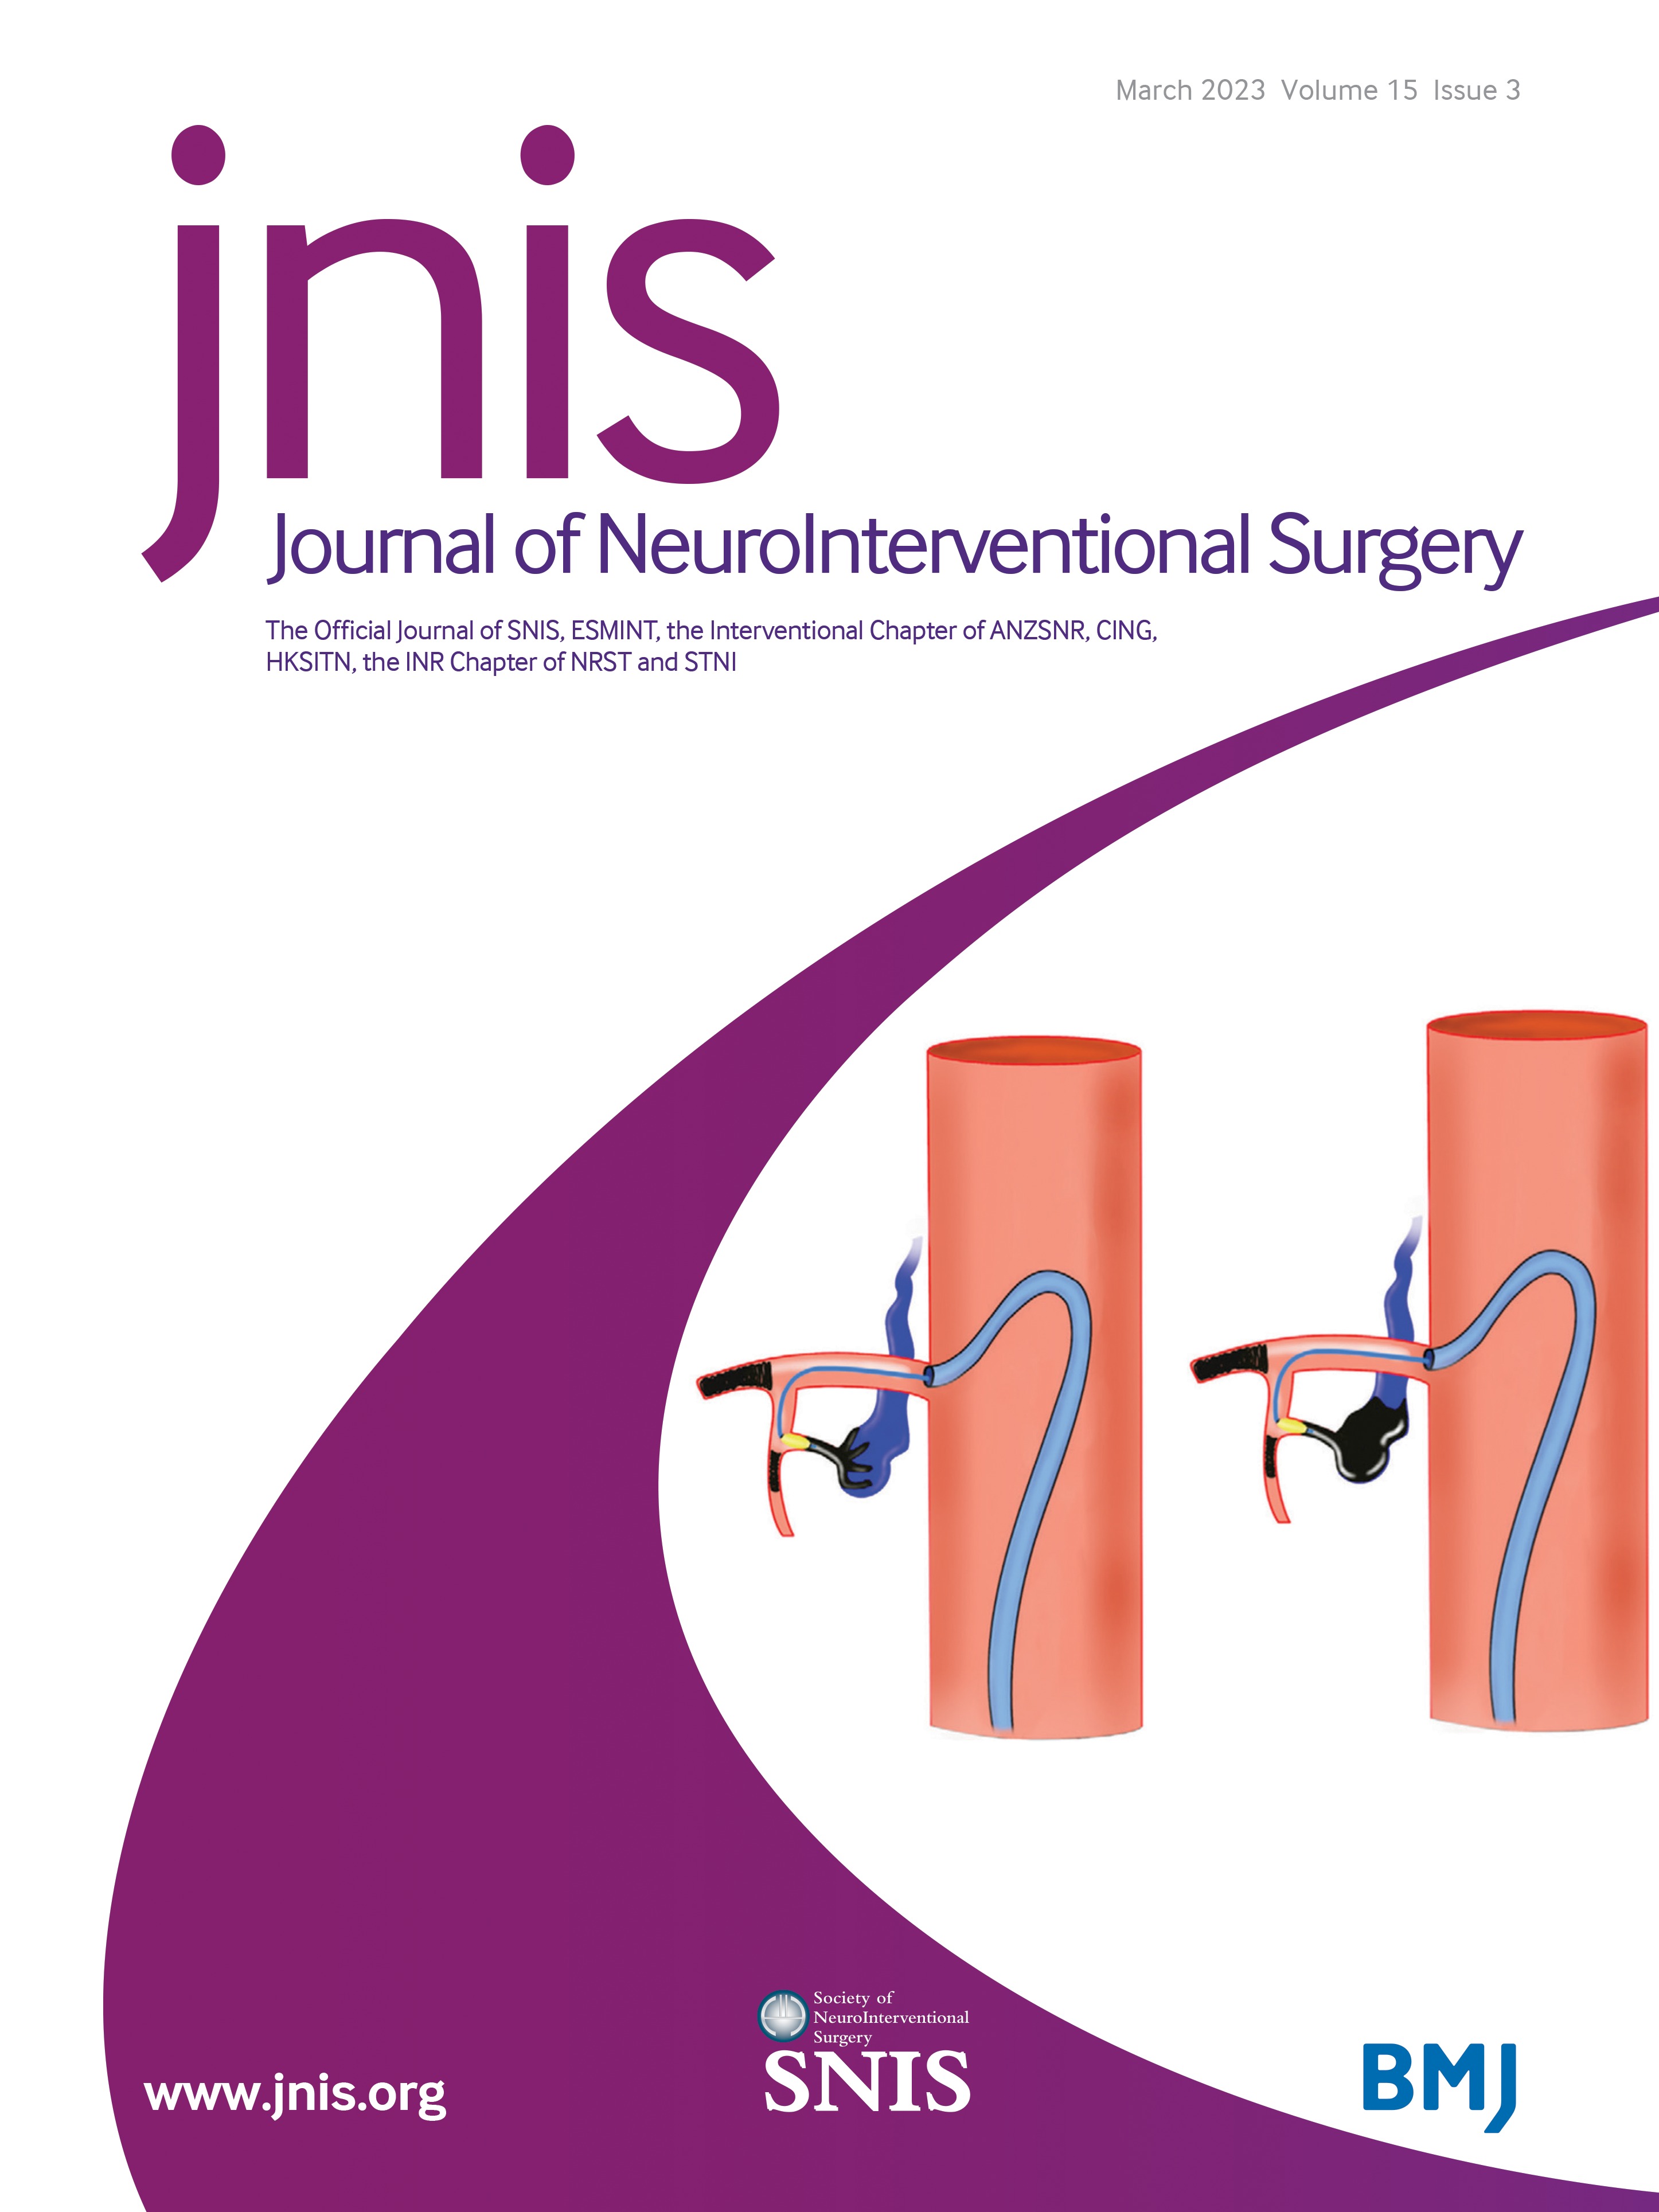 'Balloon pressure technique' for endovascular treatment of spinal cord arteriovenous fistulas: preliminary results in 10 cases